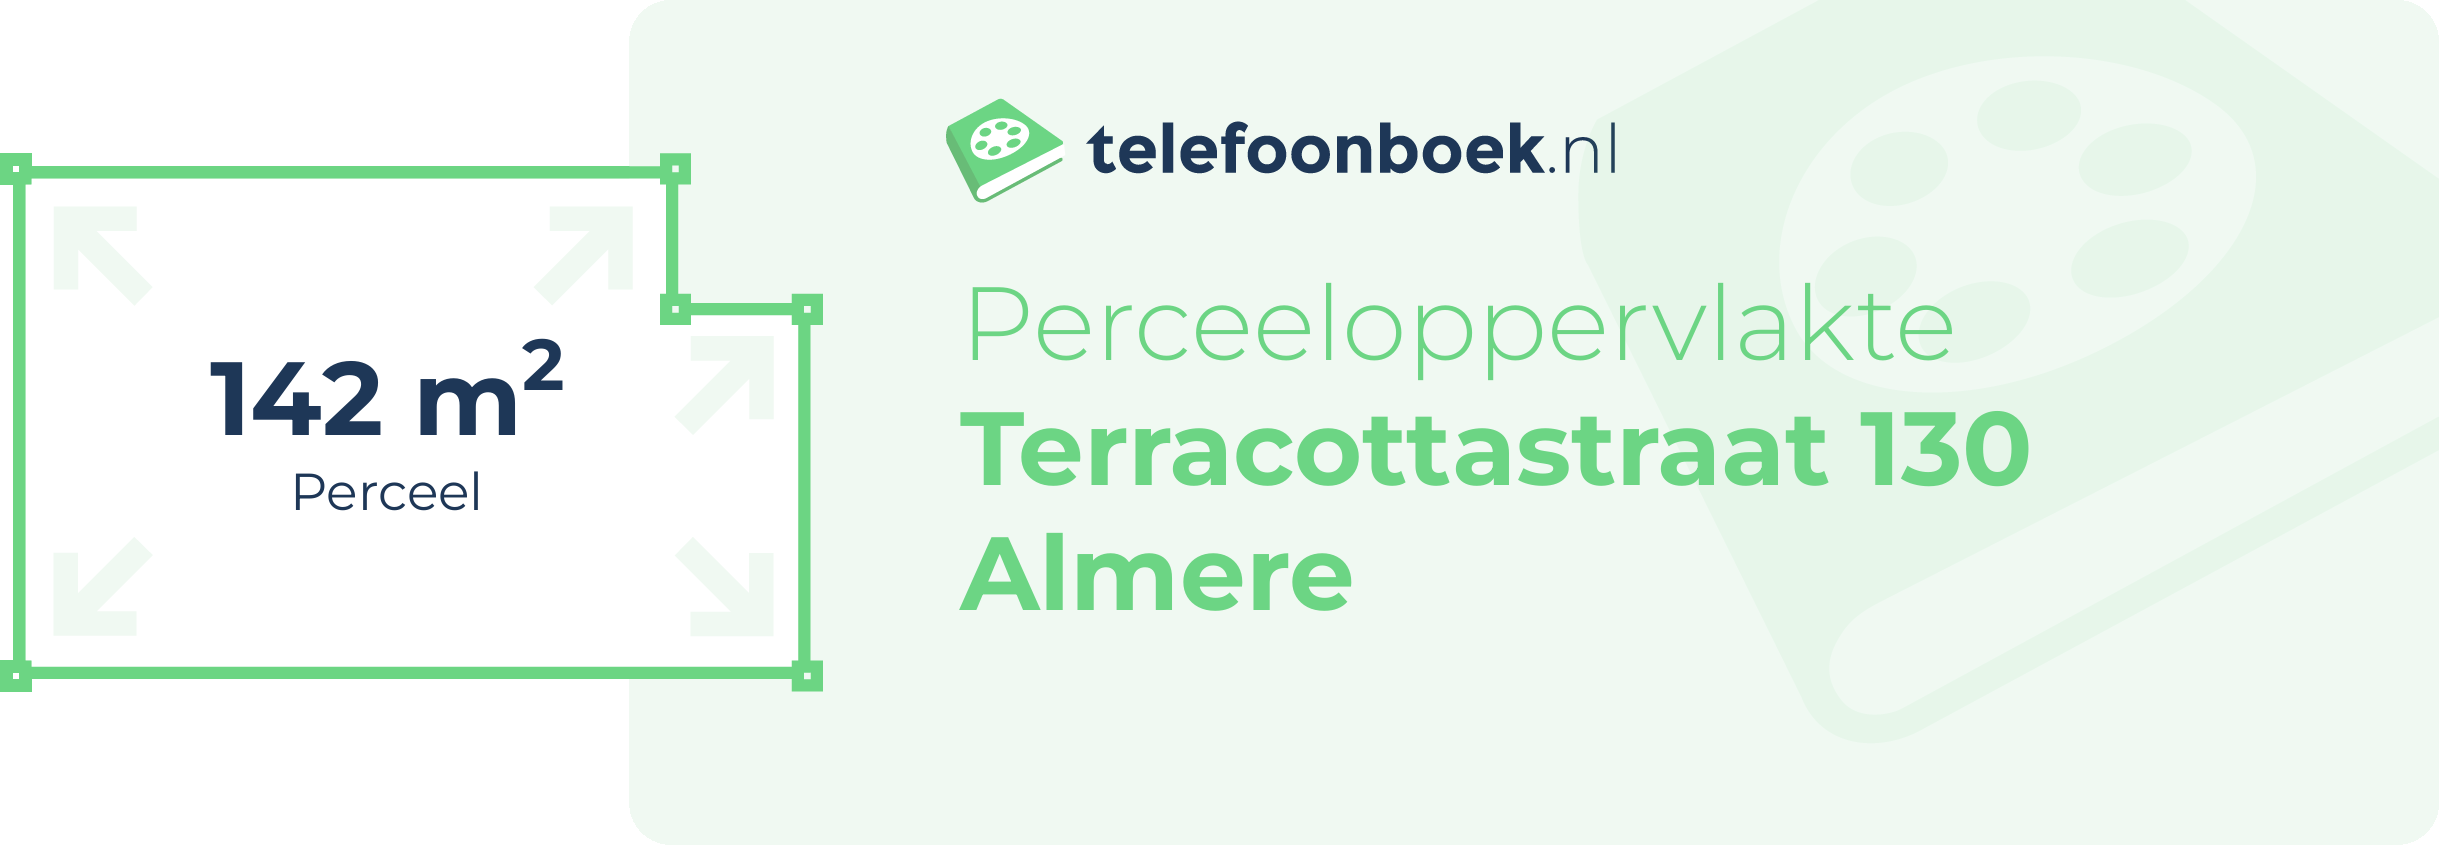 Perceeloppervlakte Terracottastraat 130 Almere